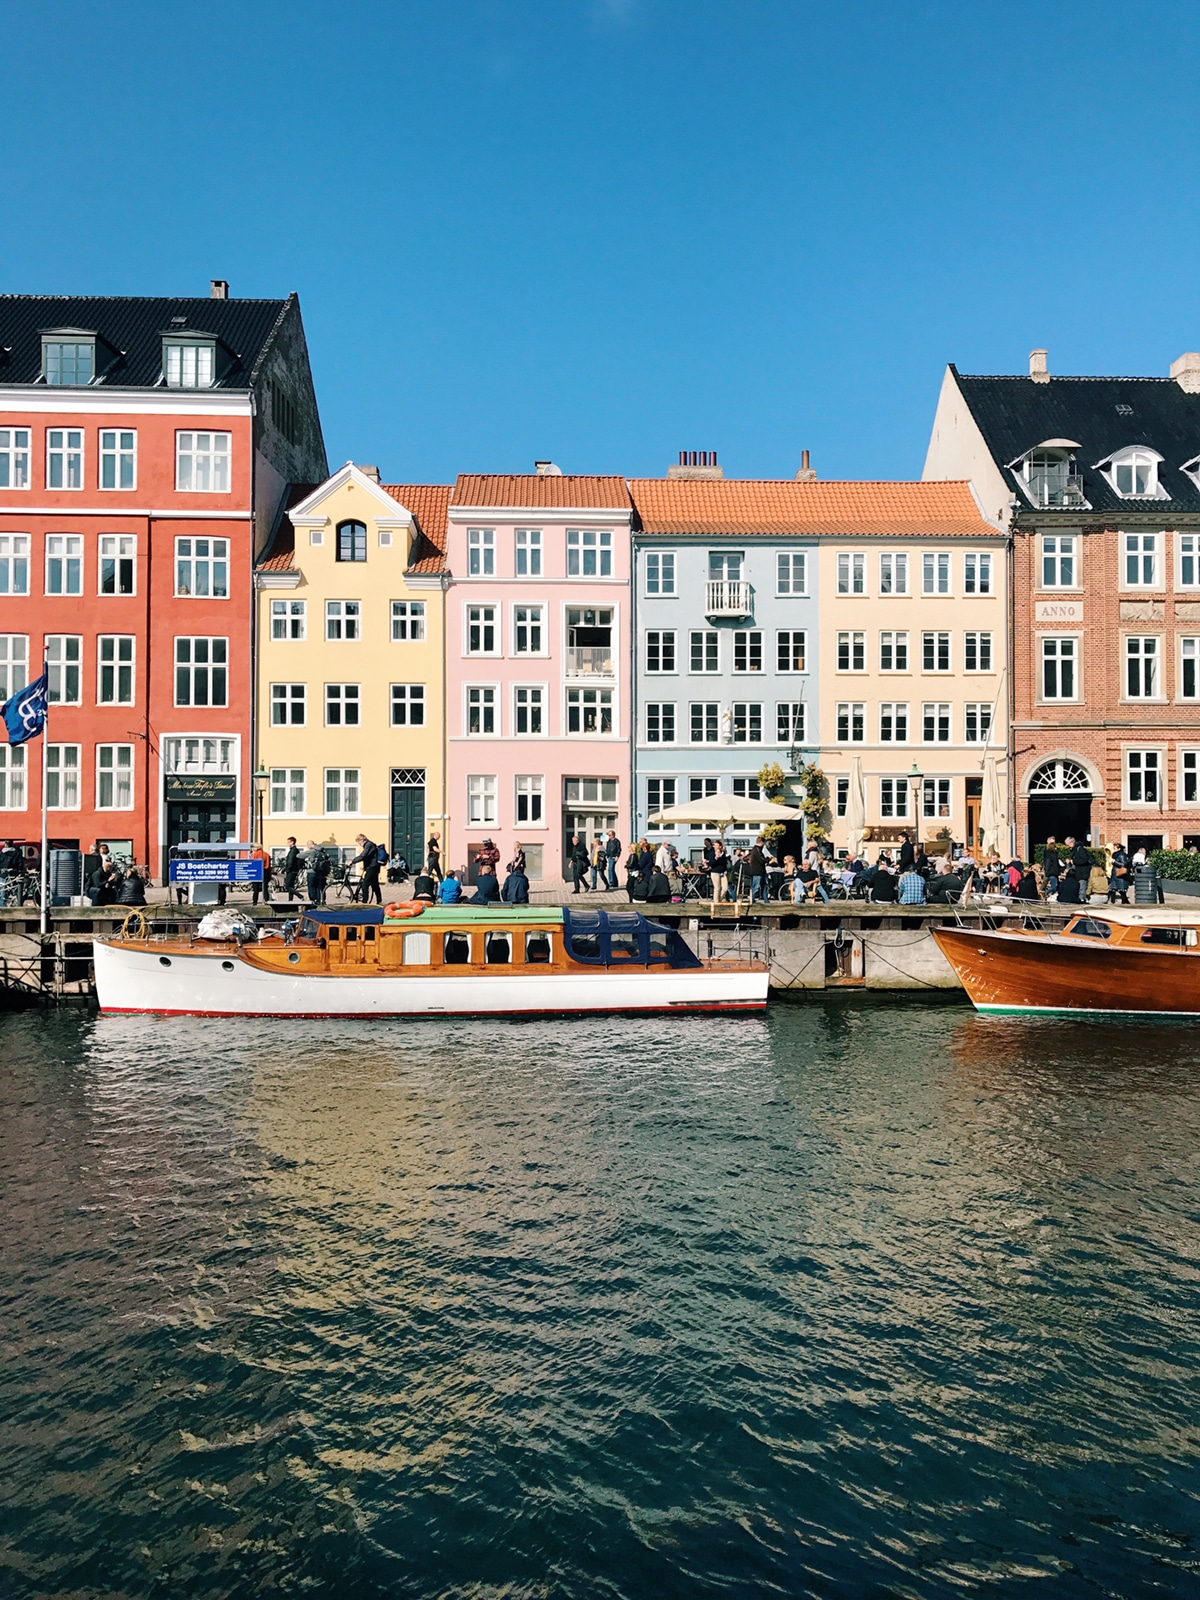 the popular Nyhavn canal in Copenhagen | travel guide on coco kelley